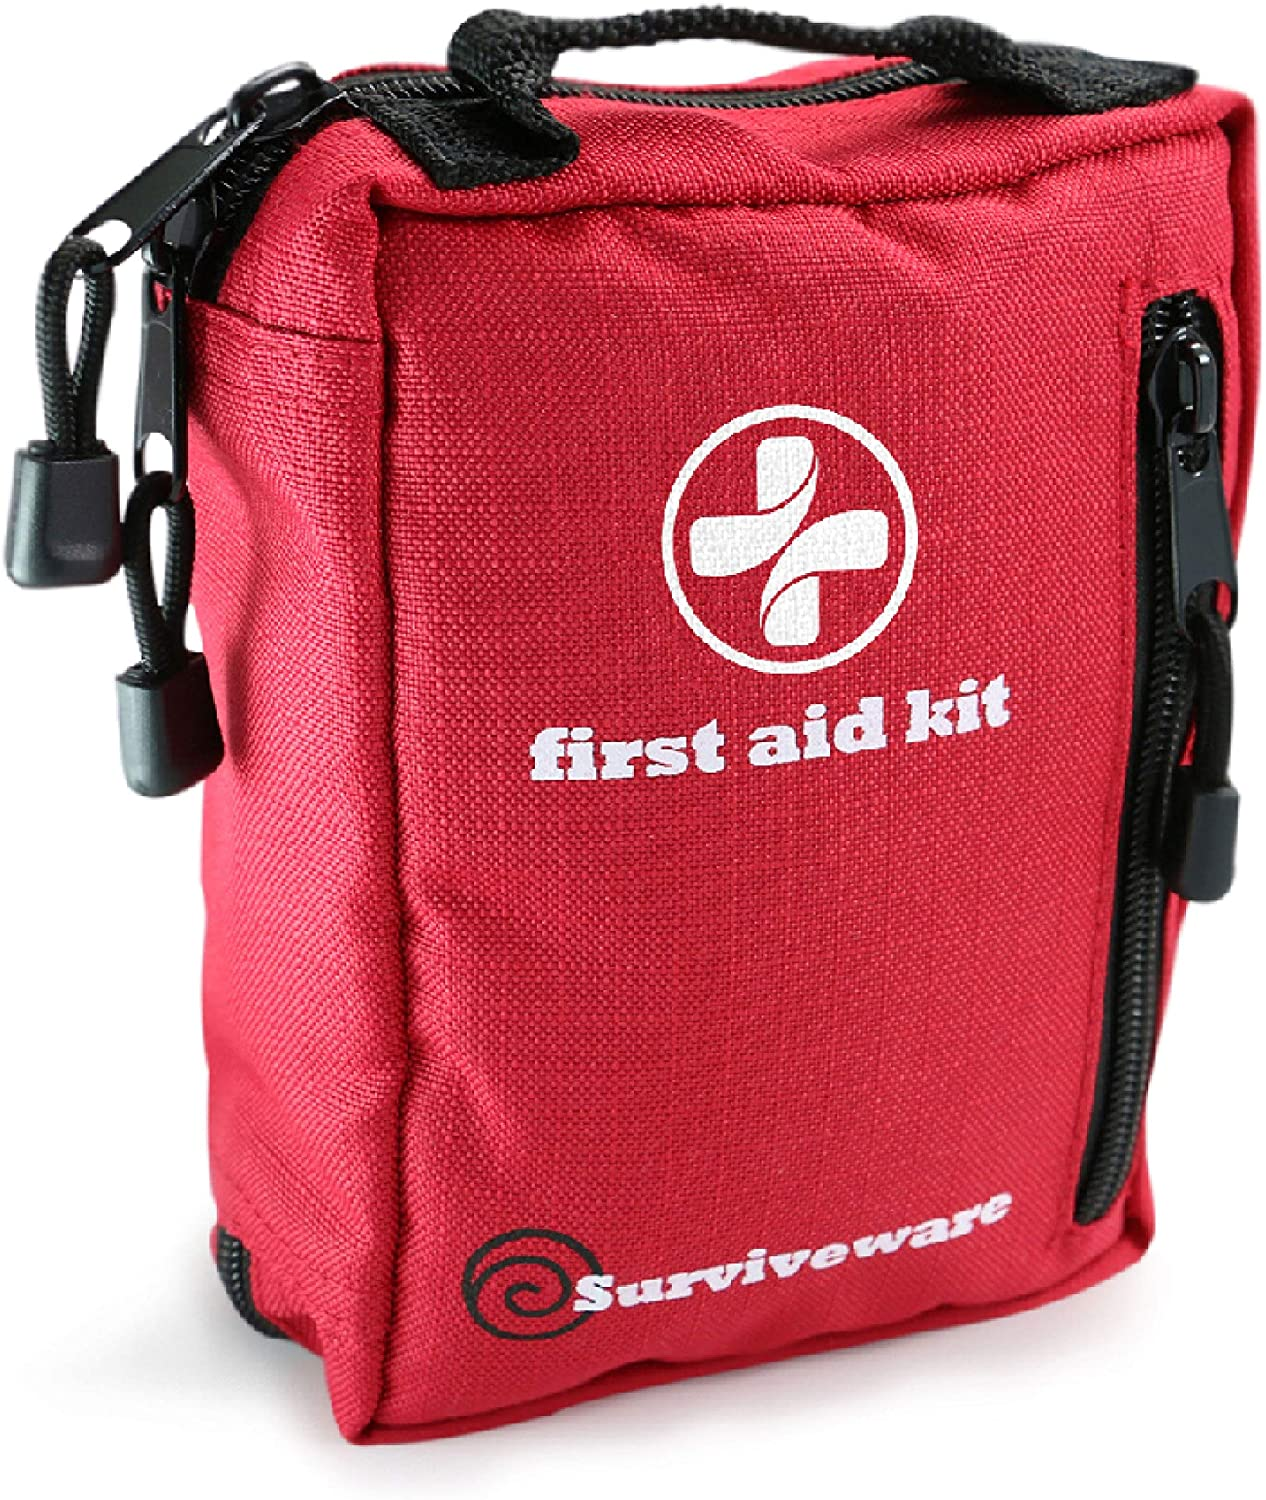 Mini First Aid Kit Bag Outdoor Medical Emergency Survival Car Home EDC  Bushcraft